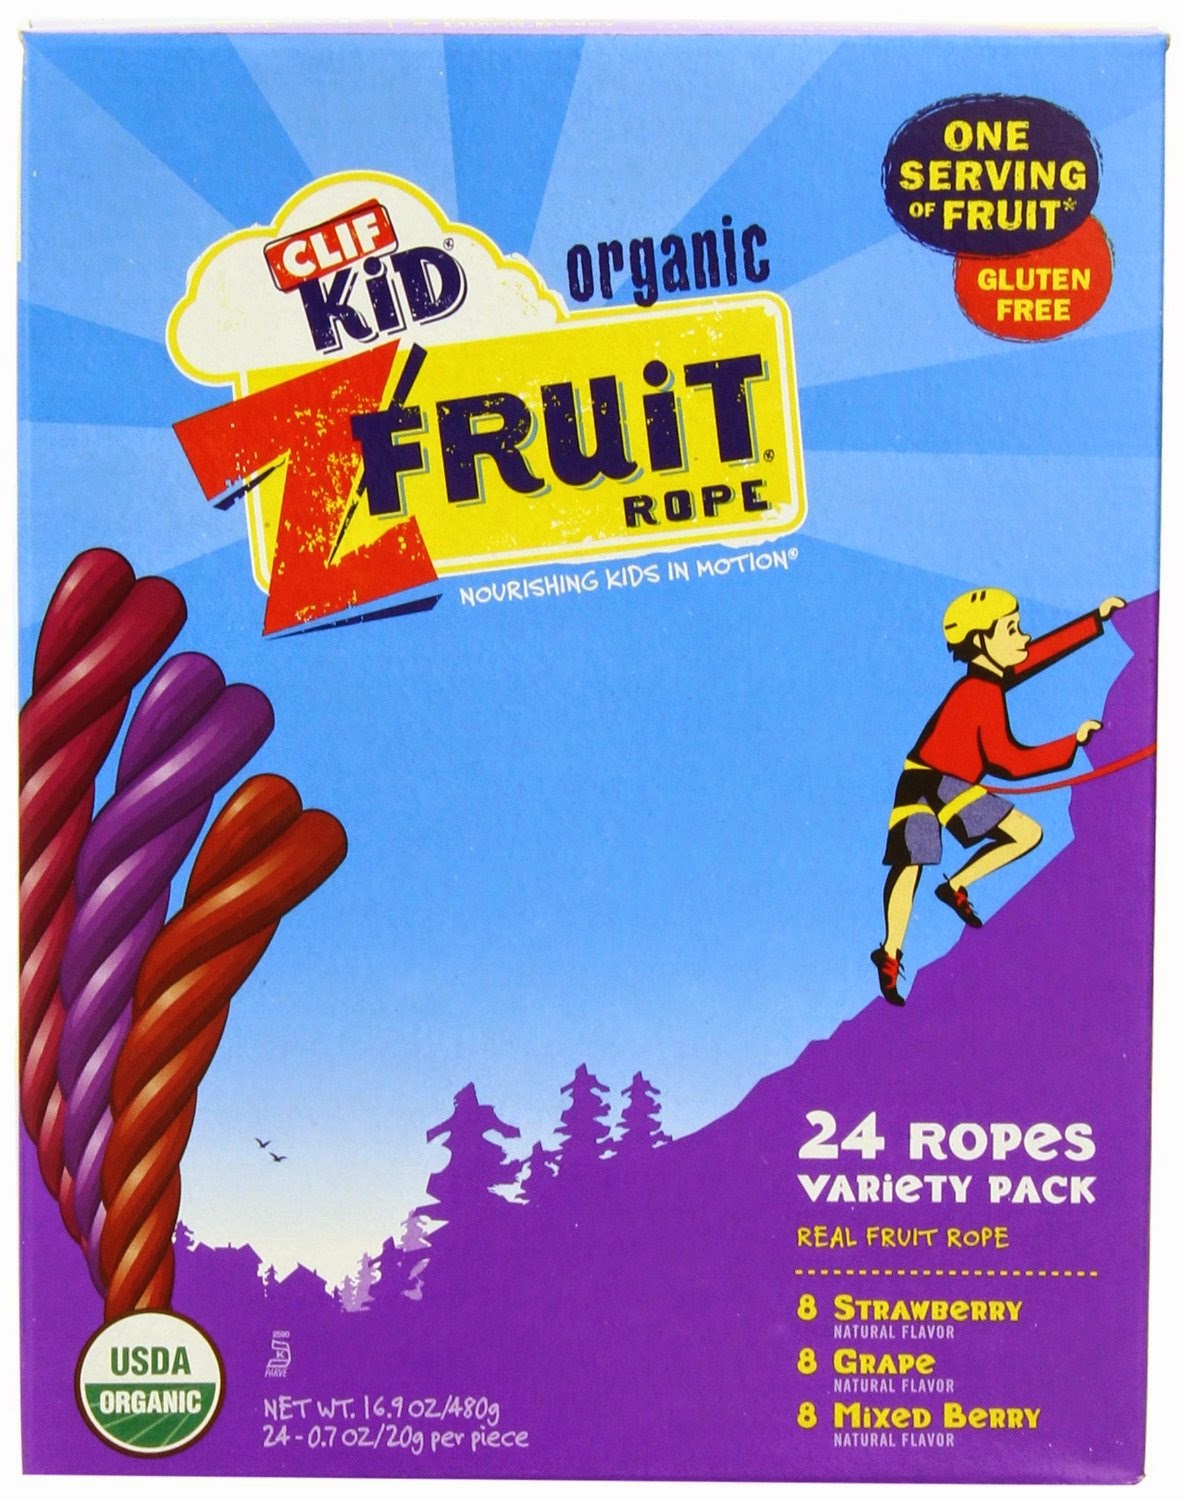 Twisted Fruit Clif Kid Organic Fruit Rope, 0.7-oz Bars